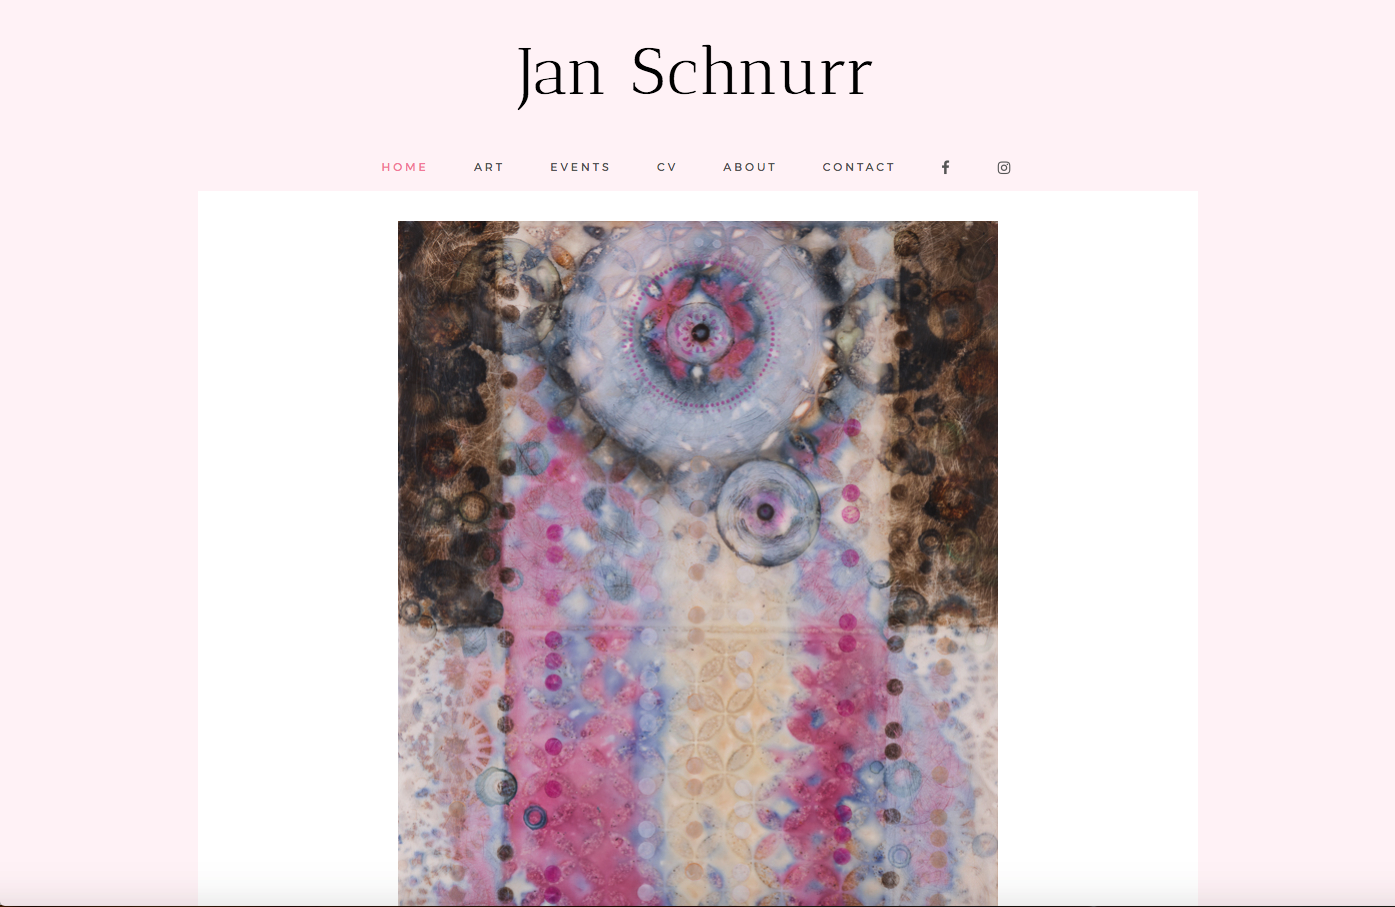 Jan Schnurr Artist